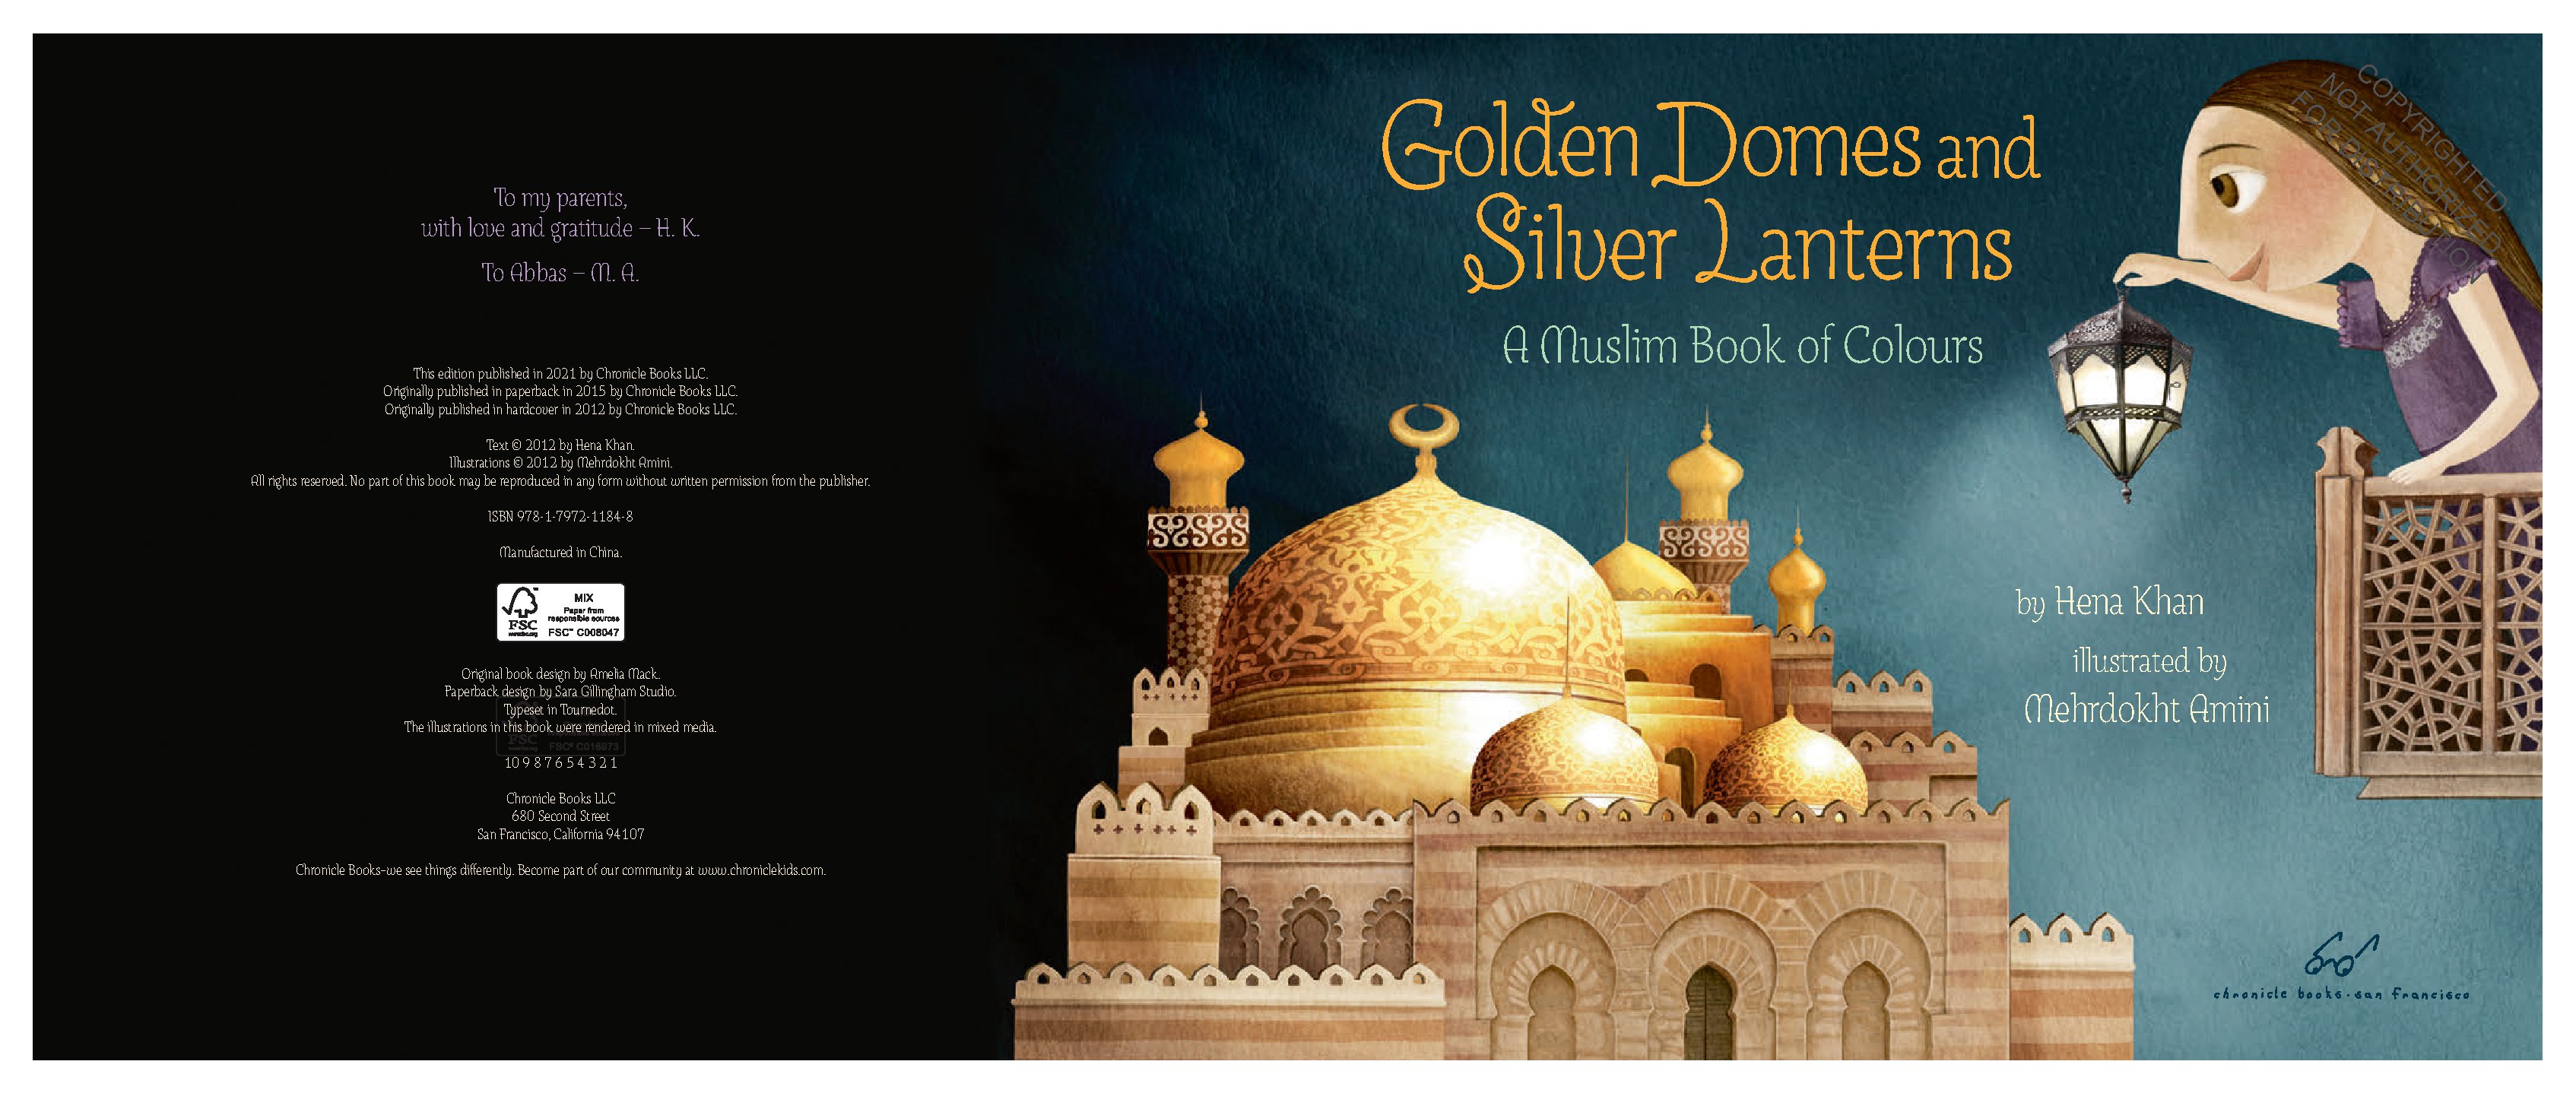 Golden Domes and Silver Lanterns (international pb)